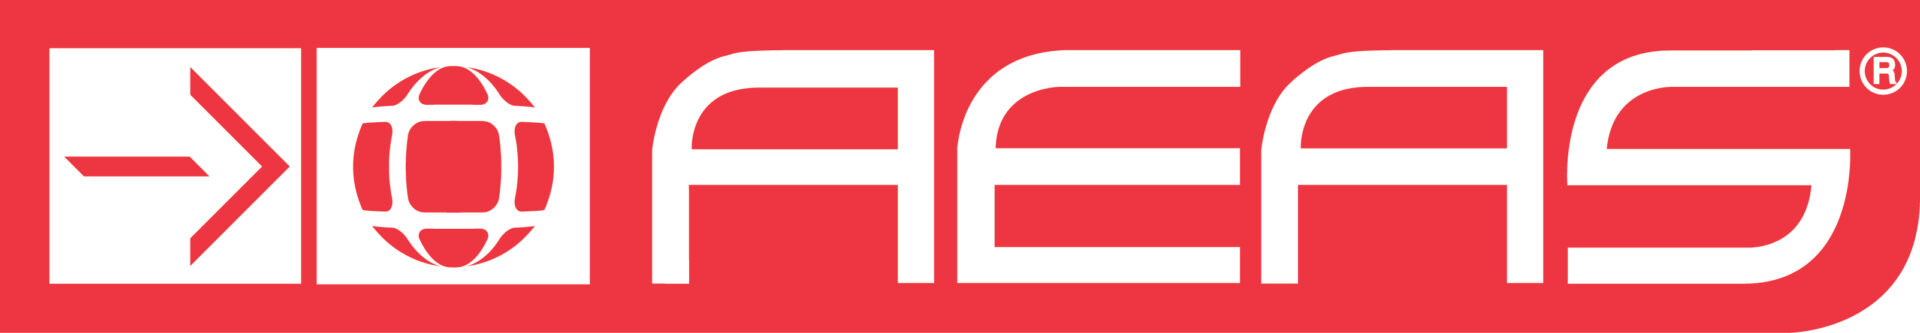 AEAS_globe_R_logo.jpg